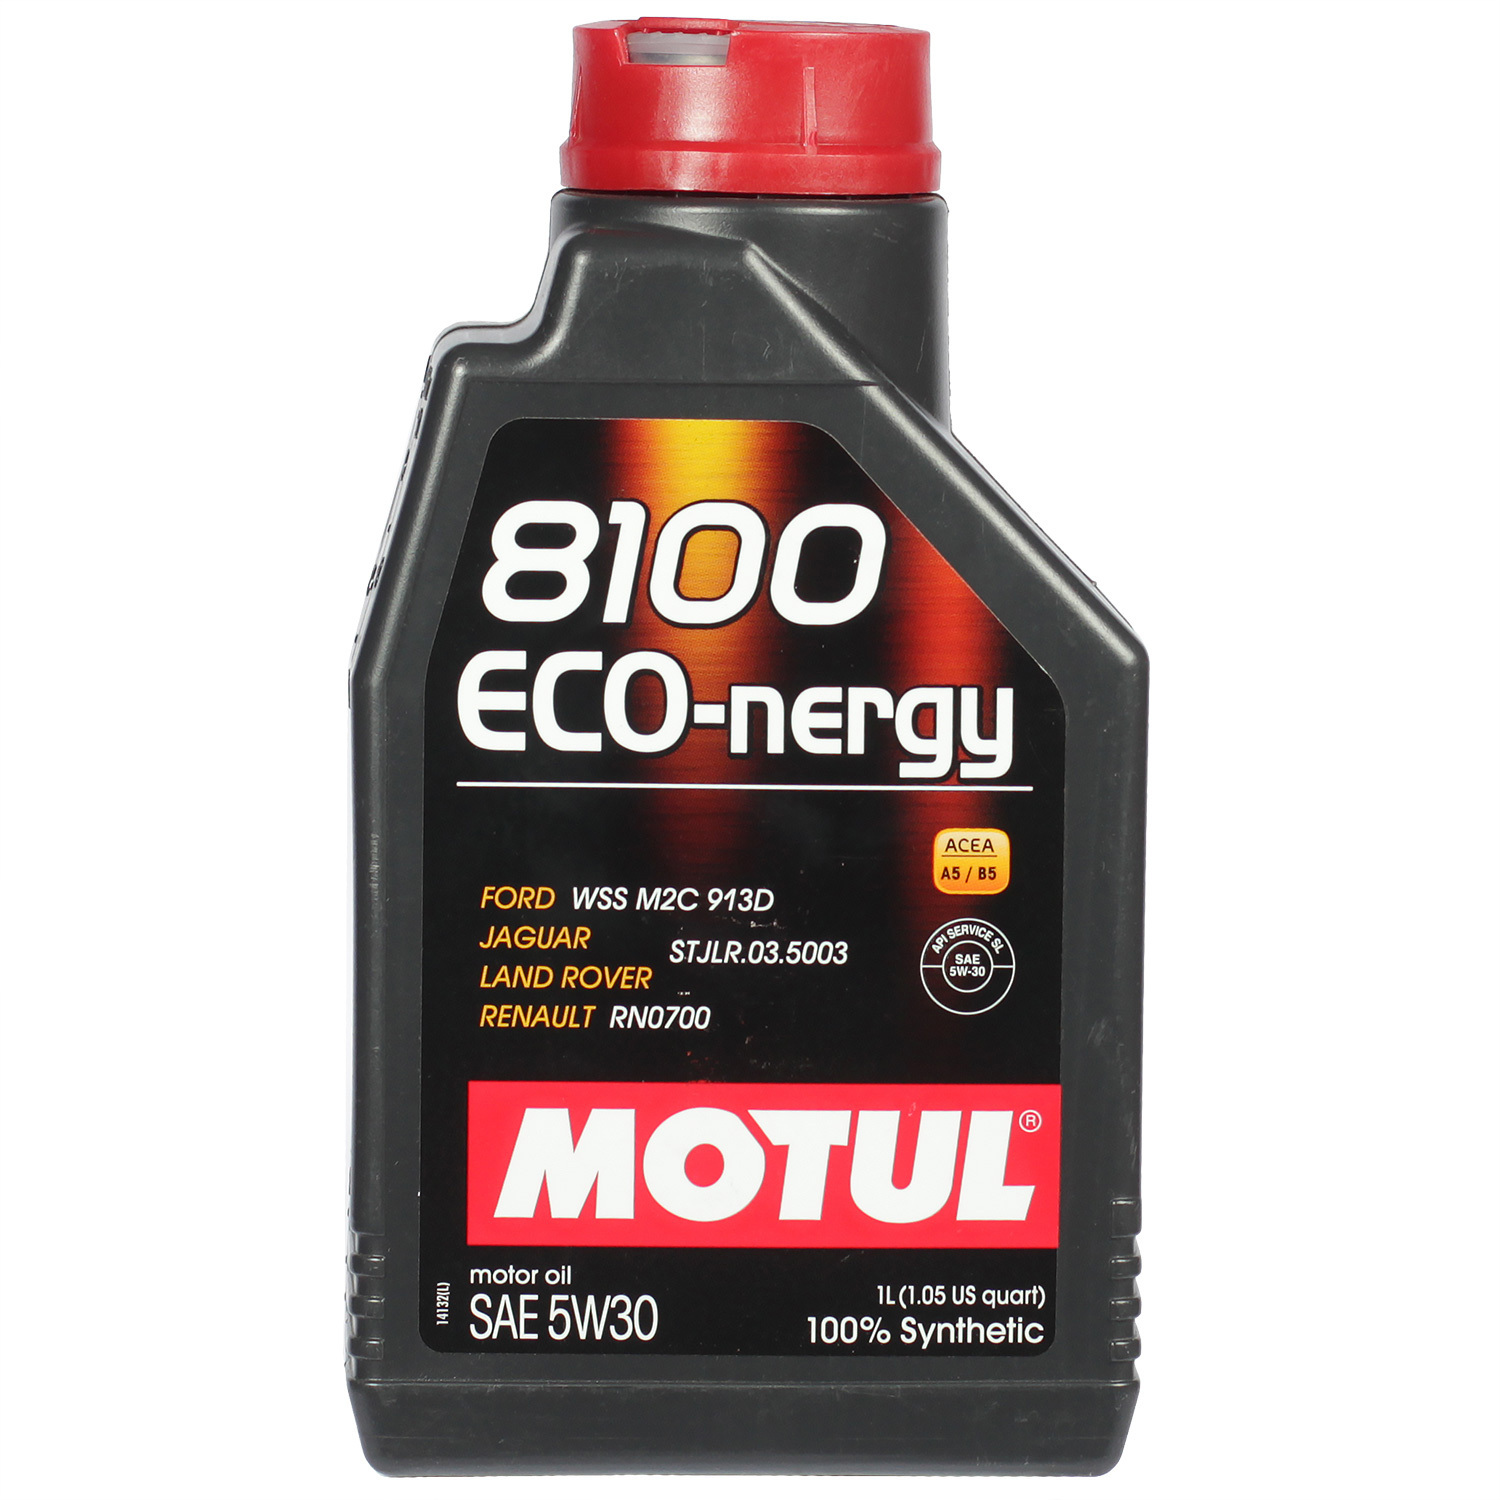 Motul Моторное масло Motul 8100 Eco-nergy 5W-30, 1 л motul моторное масло motul 8100 x clean 5w 30 1 л